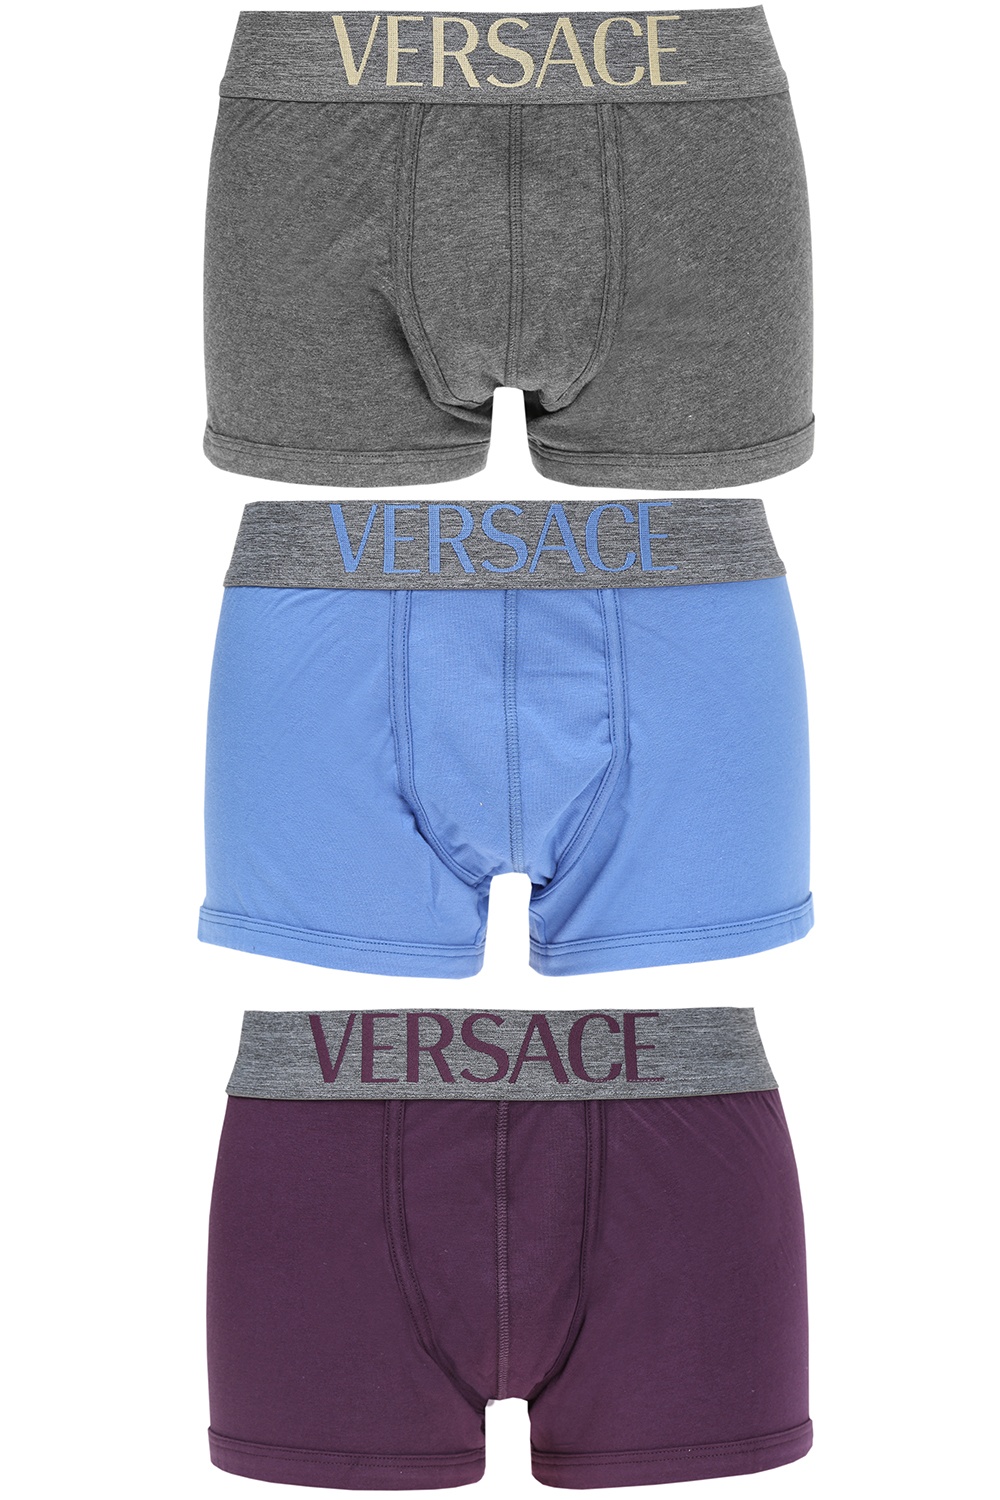 versace boxers blue